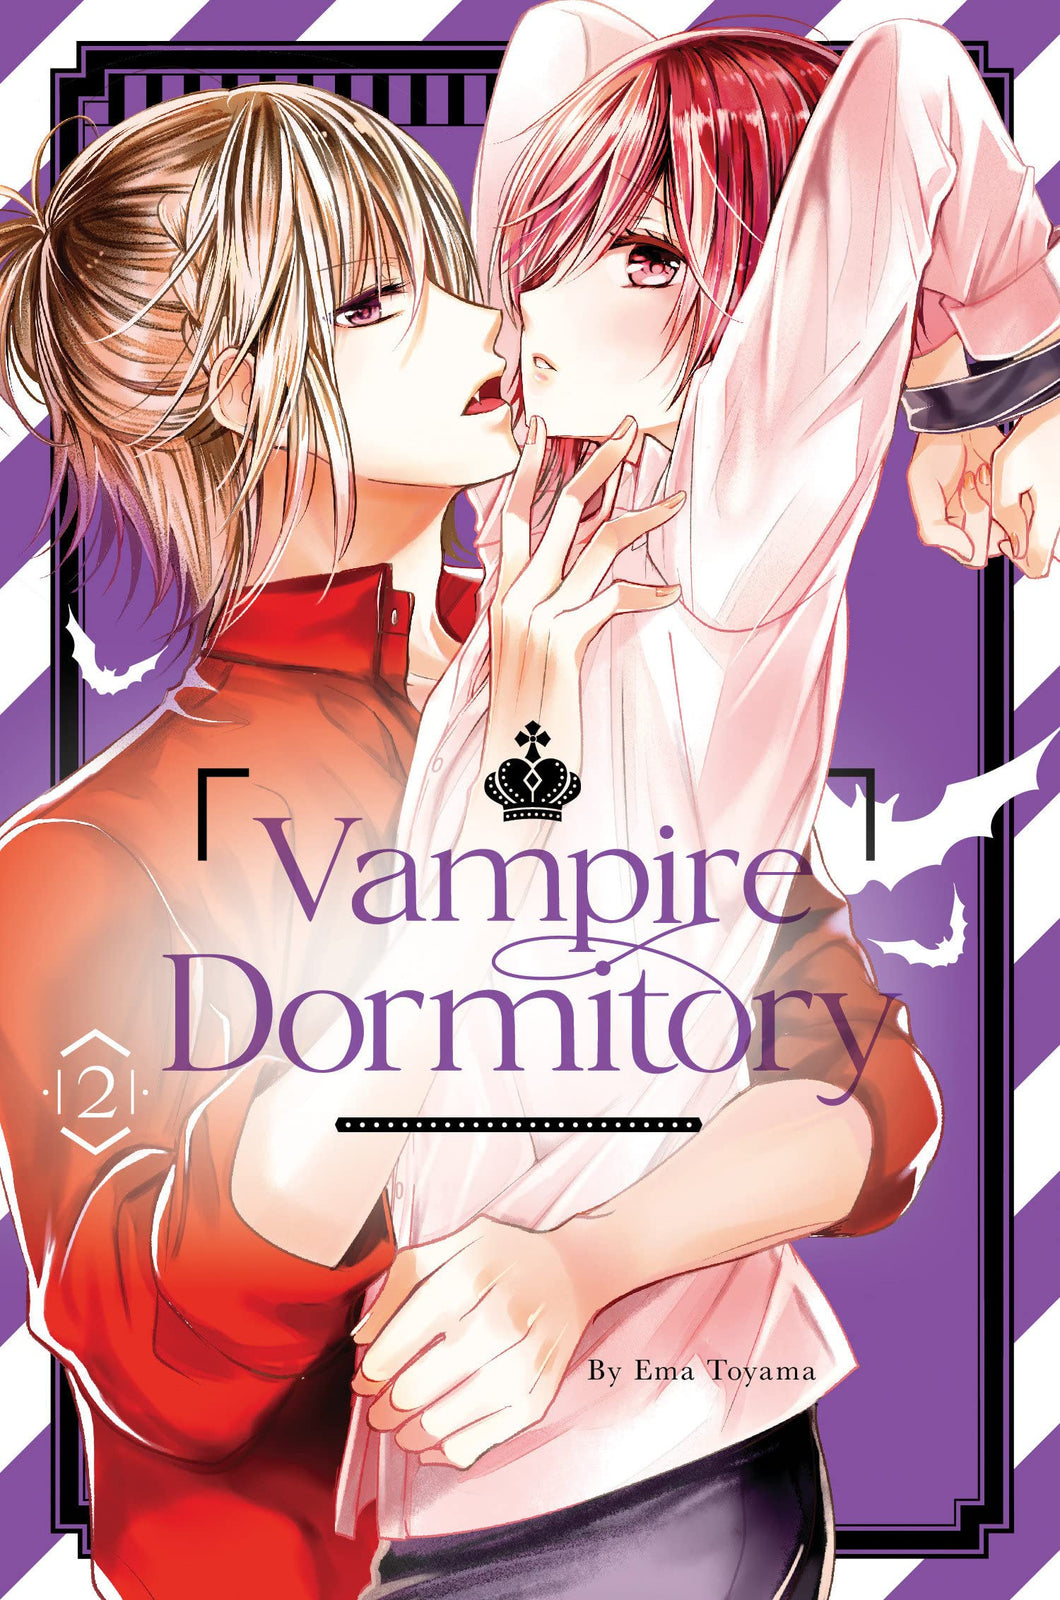 Vampire Dormitory Volume 2